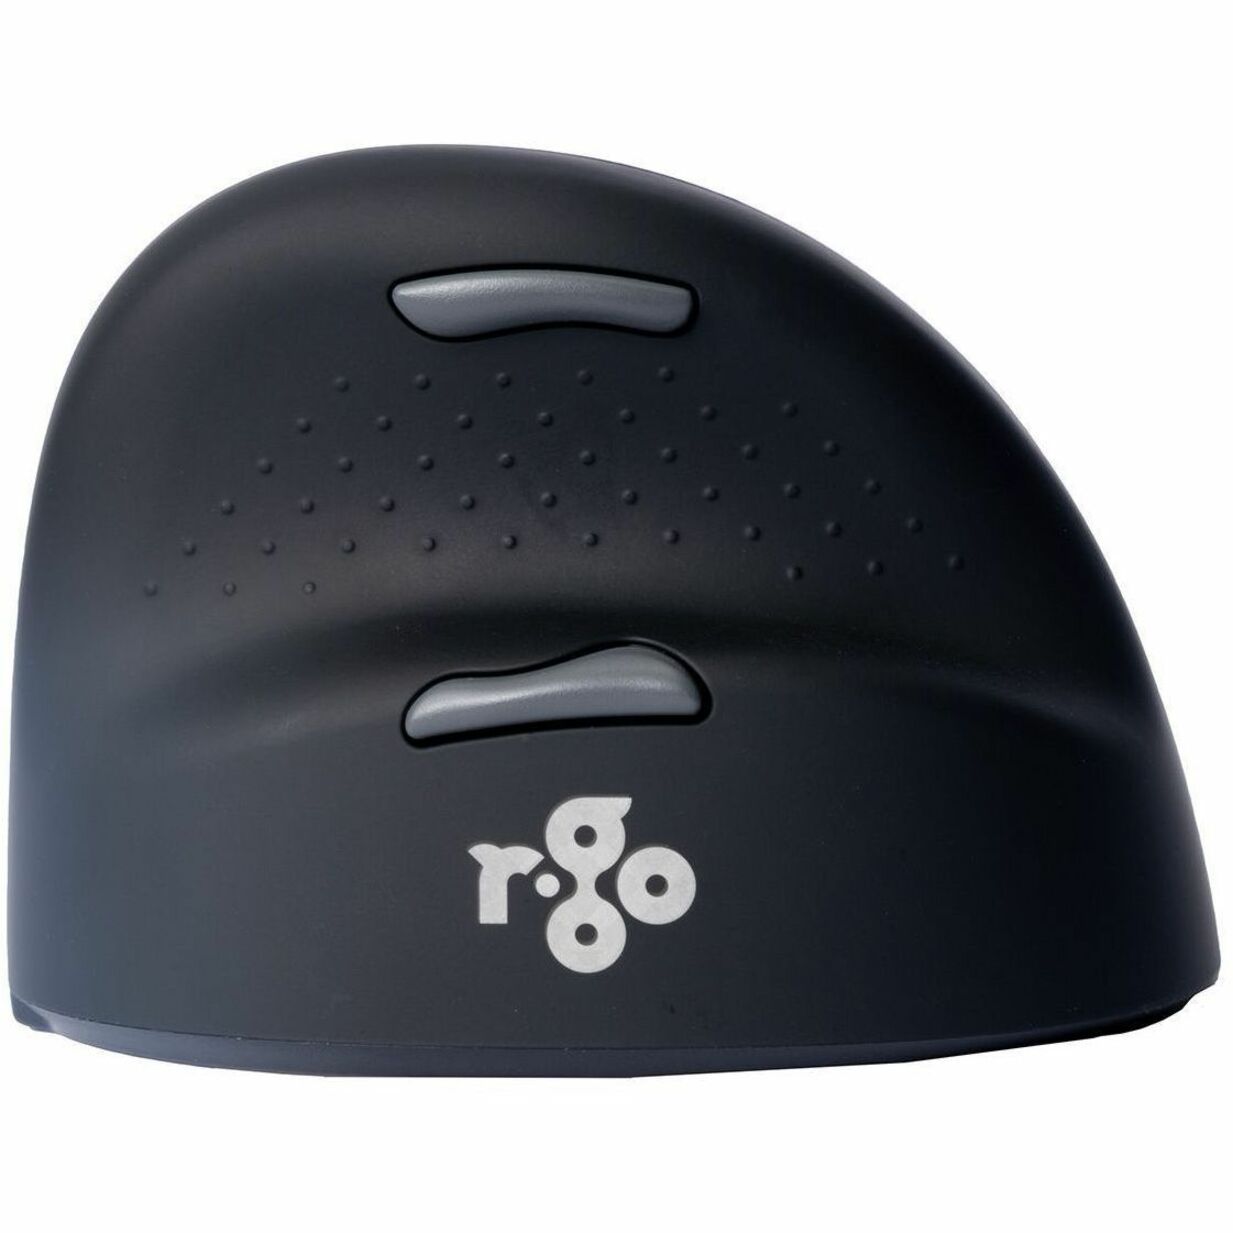 R-Go Tools R-Go HE Break ergonomic mouse (RGOHBRSWLBL)